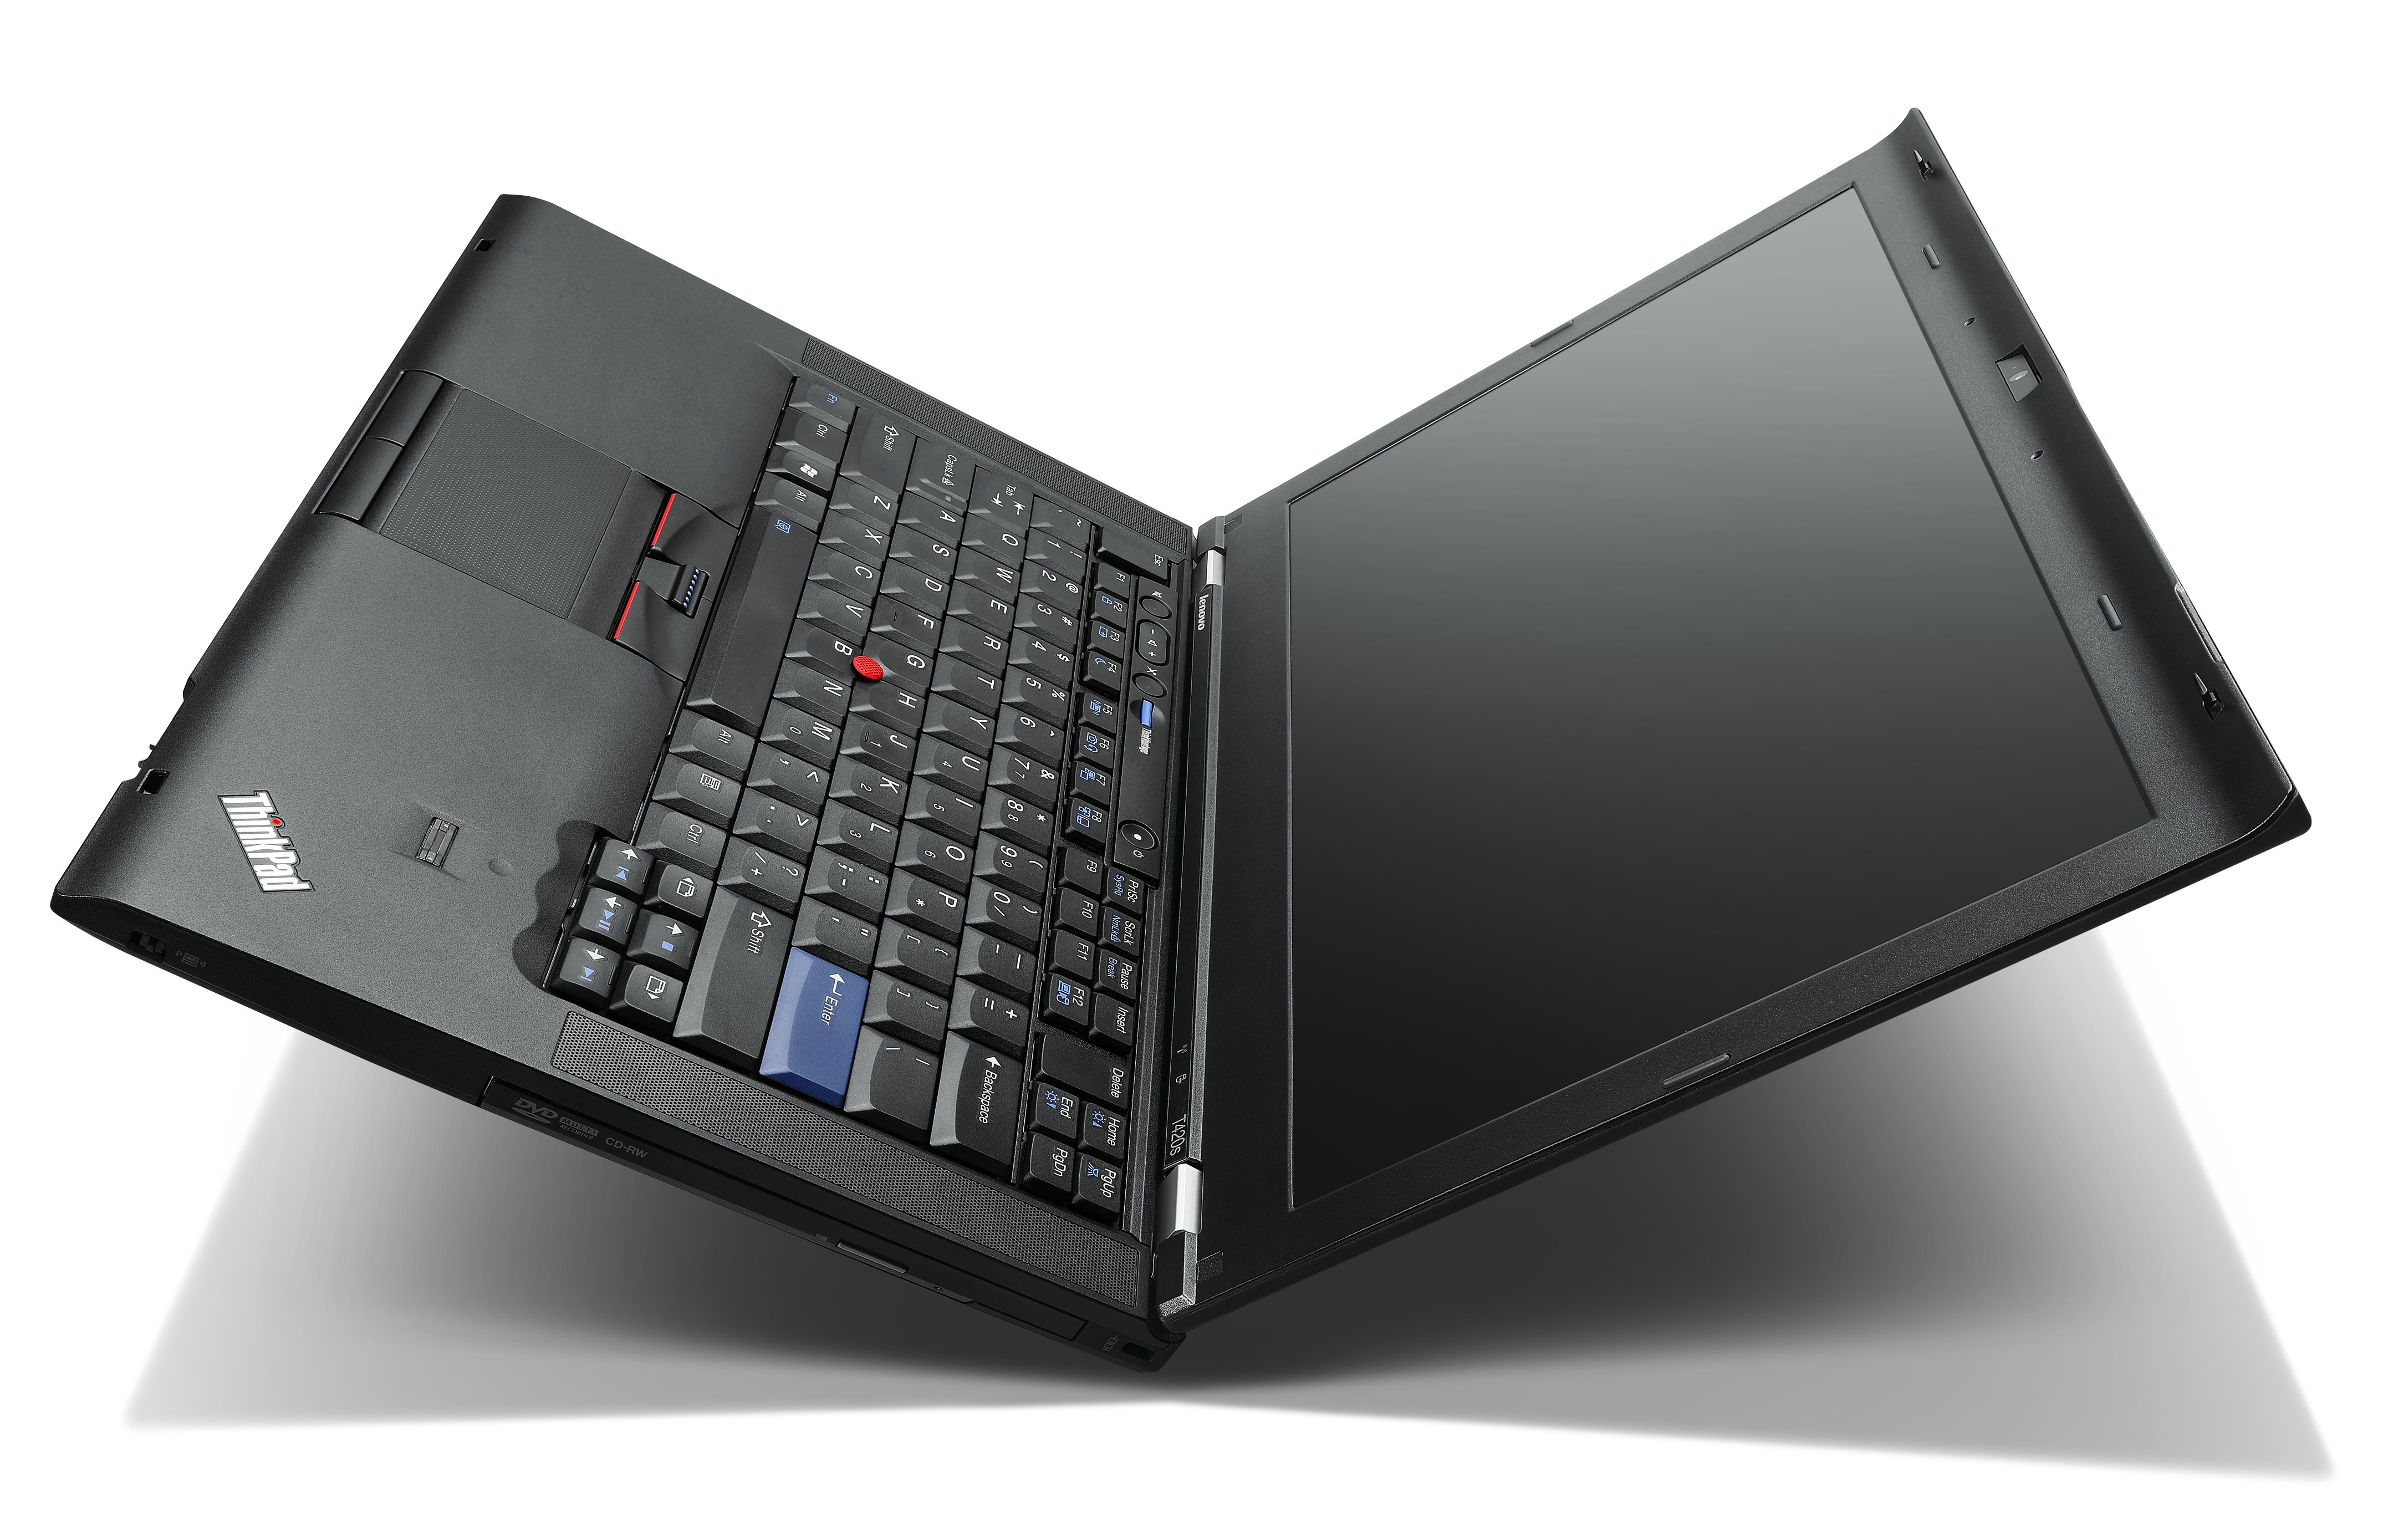 Lenovo ThinkPad T420s Details, Specs and Photos